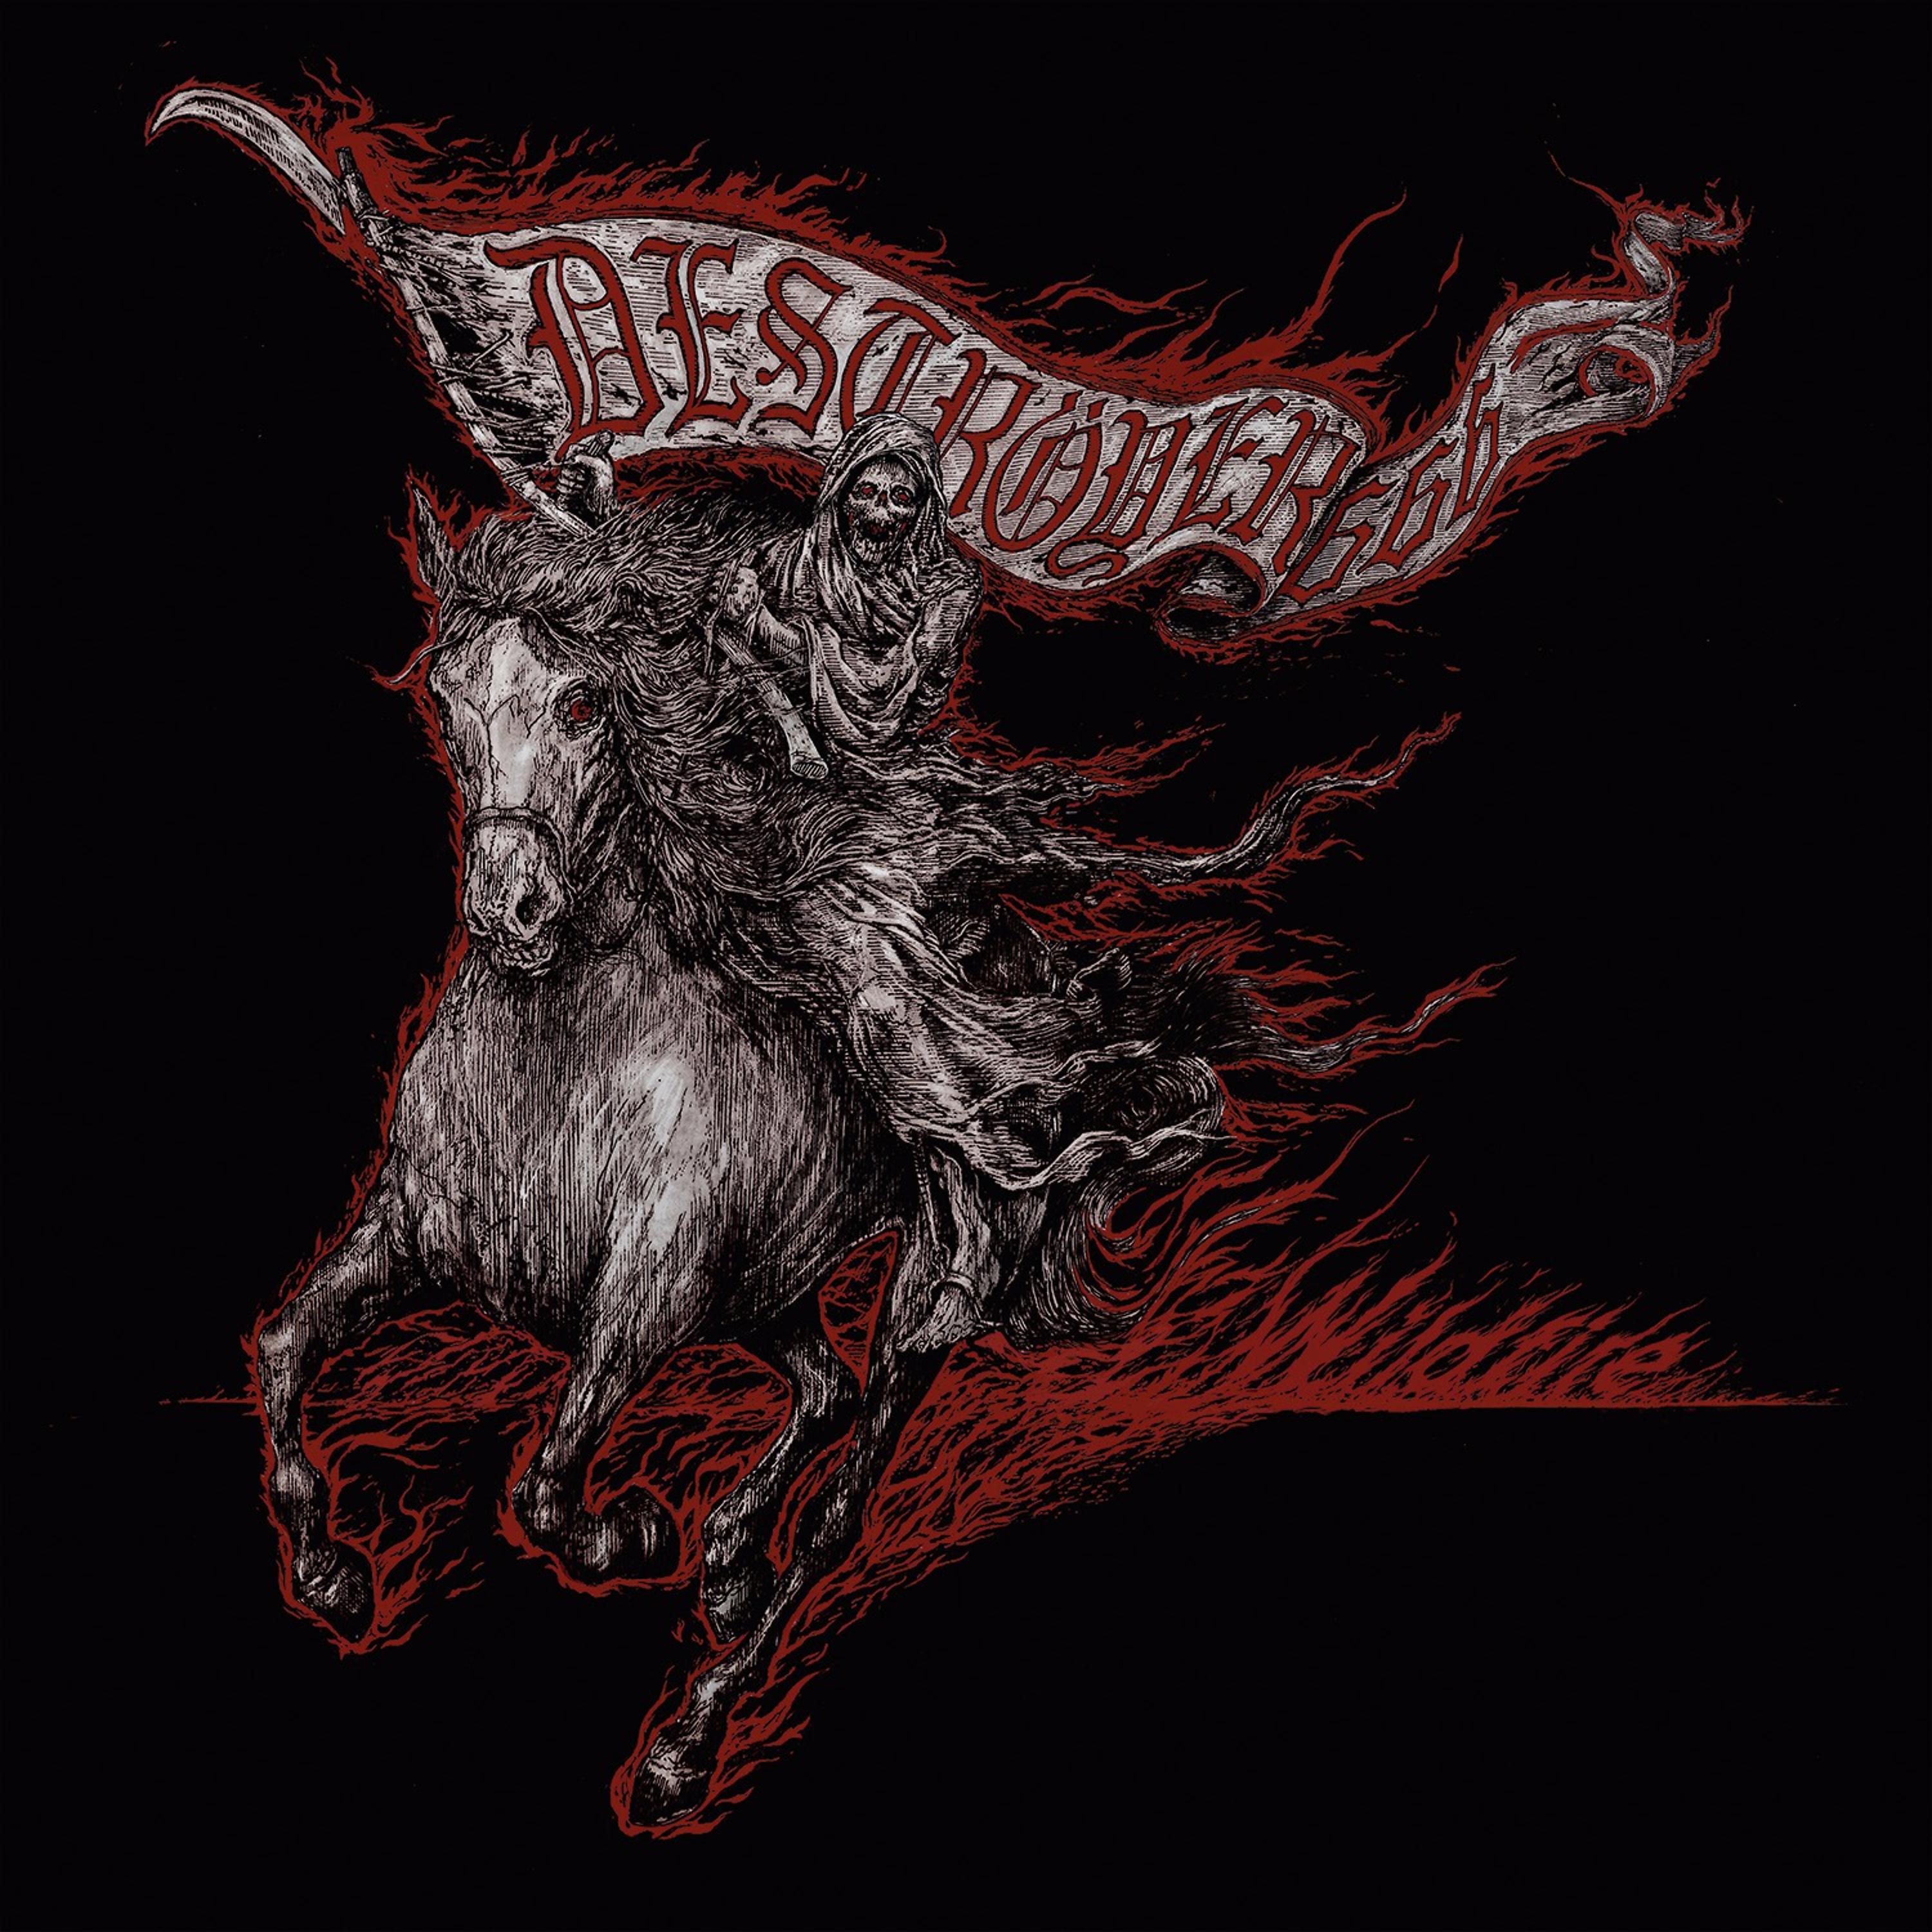 Liyawolf666. Destroyer 666 - Wildfire. Группа Deströyer 666. Deströyer 666 "Wildfire" (2016). Группа Deströyer 666 альбомы.